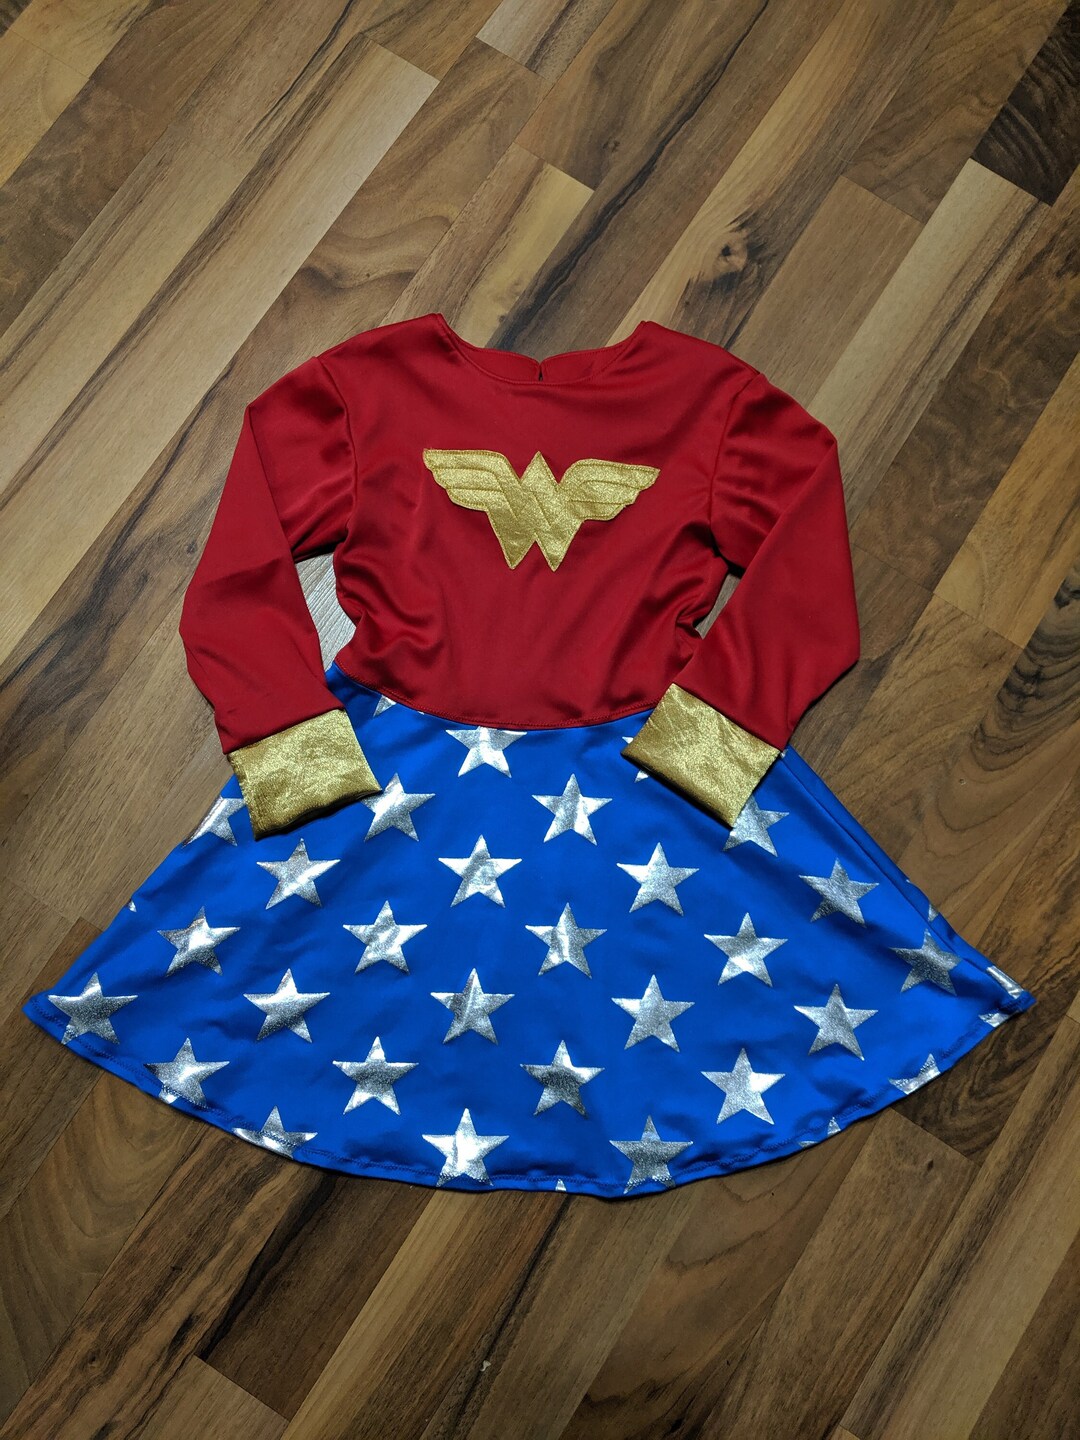 Wonder Woman Inspired Costume - Etsy